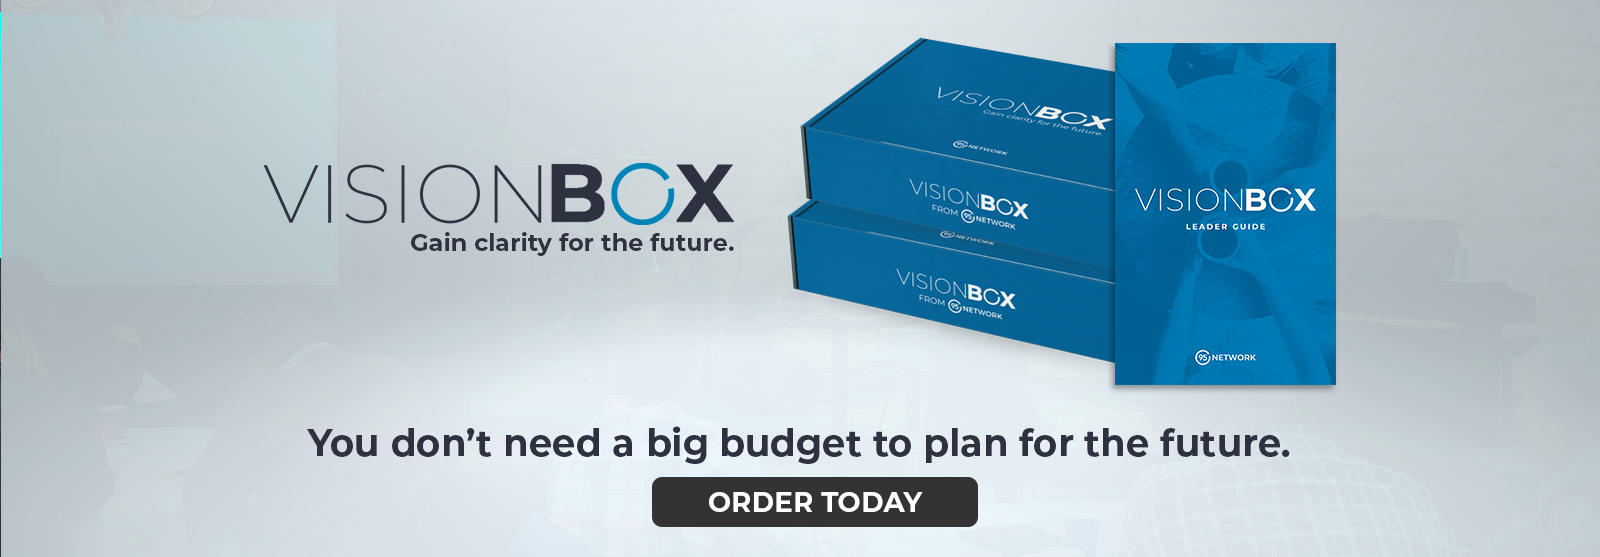 VisionBox-Social2-1